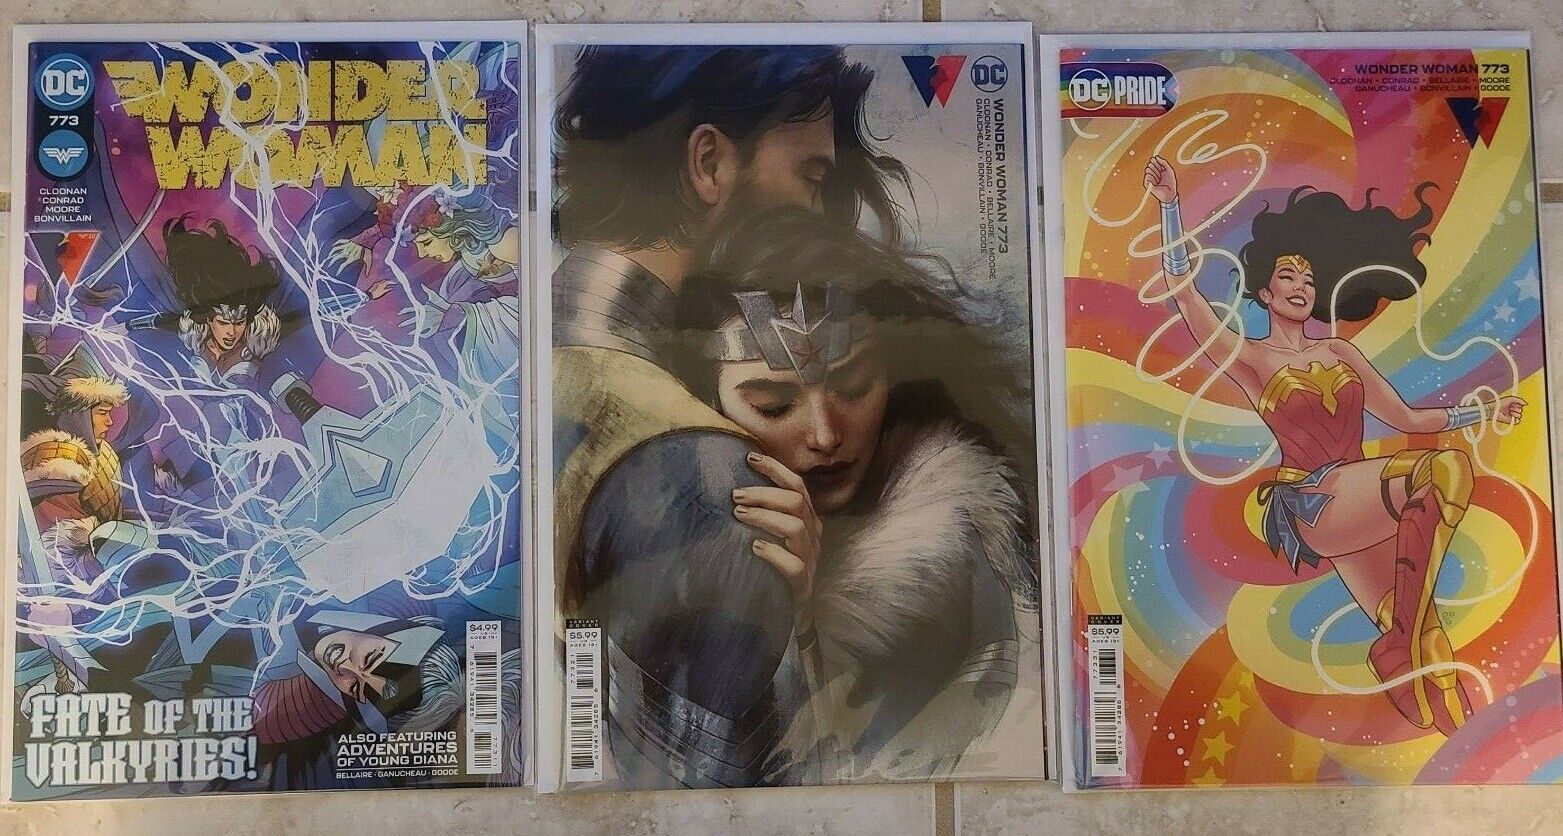 Wonder Woman Vol 5 #773 Cover A, B, C - B is Card Stock Variant NEW N/M+